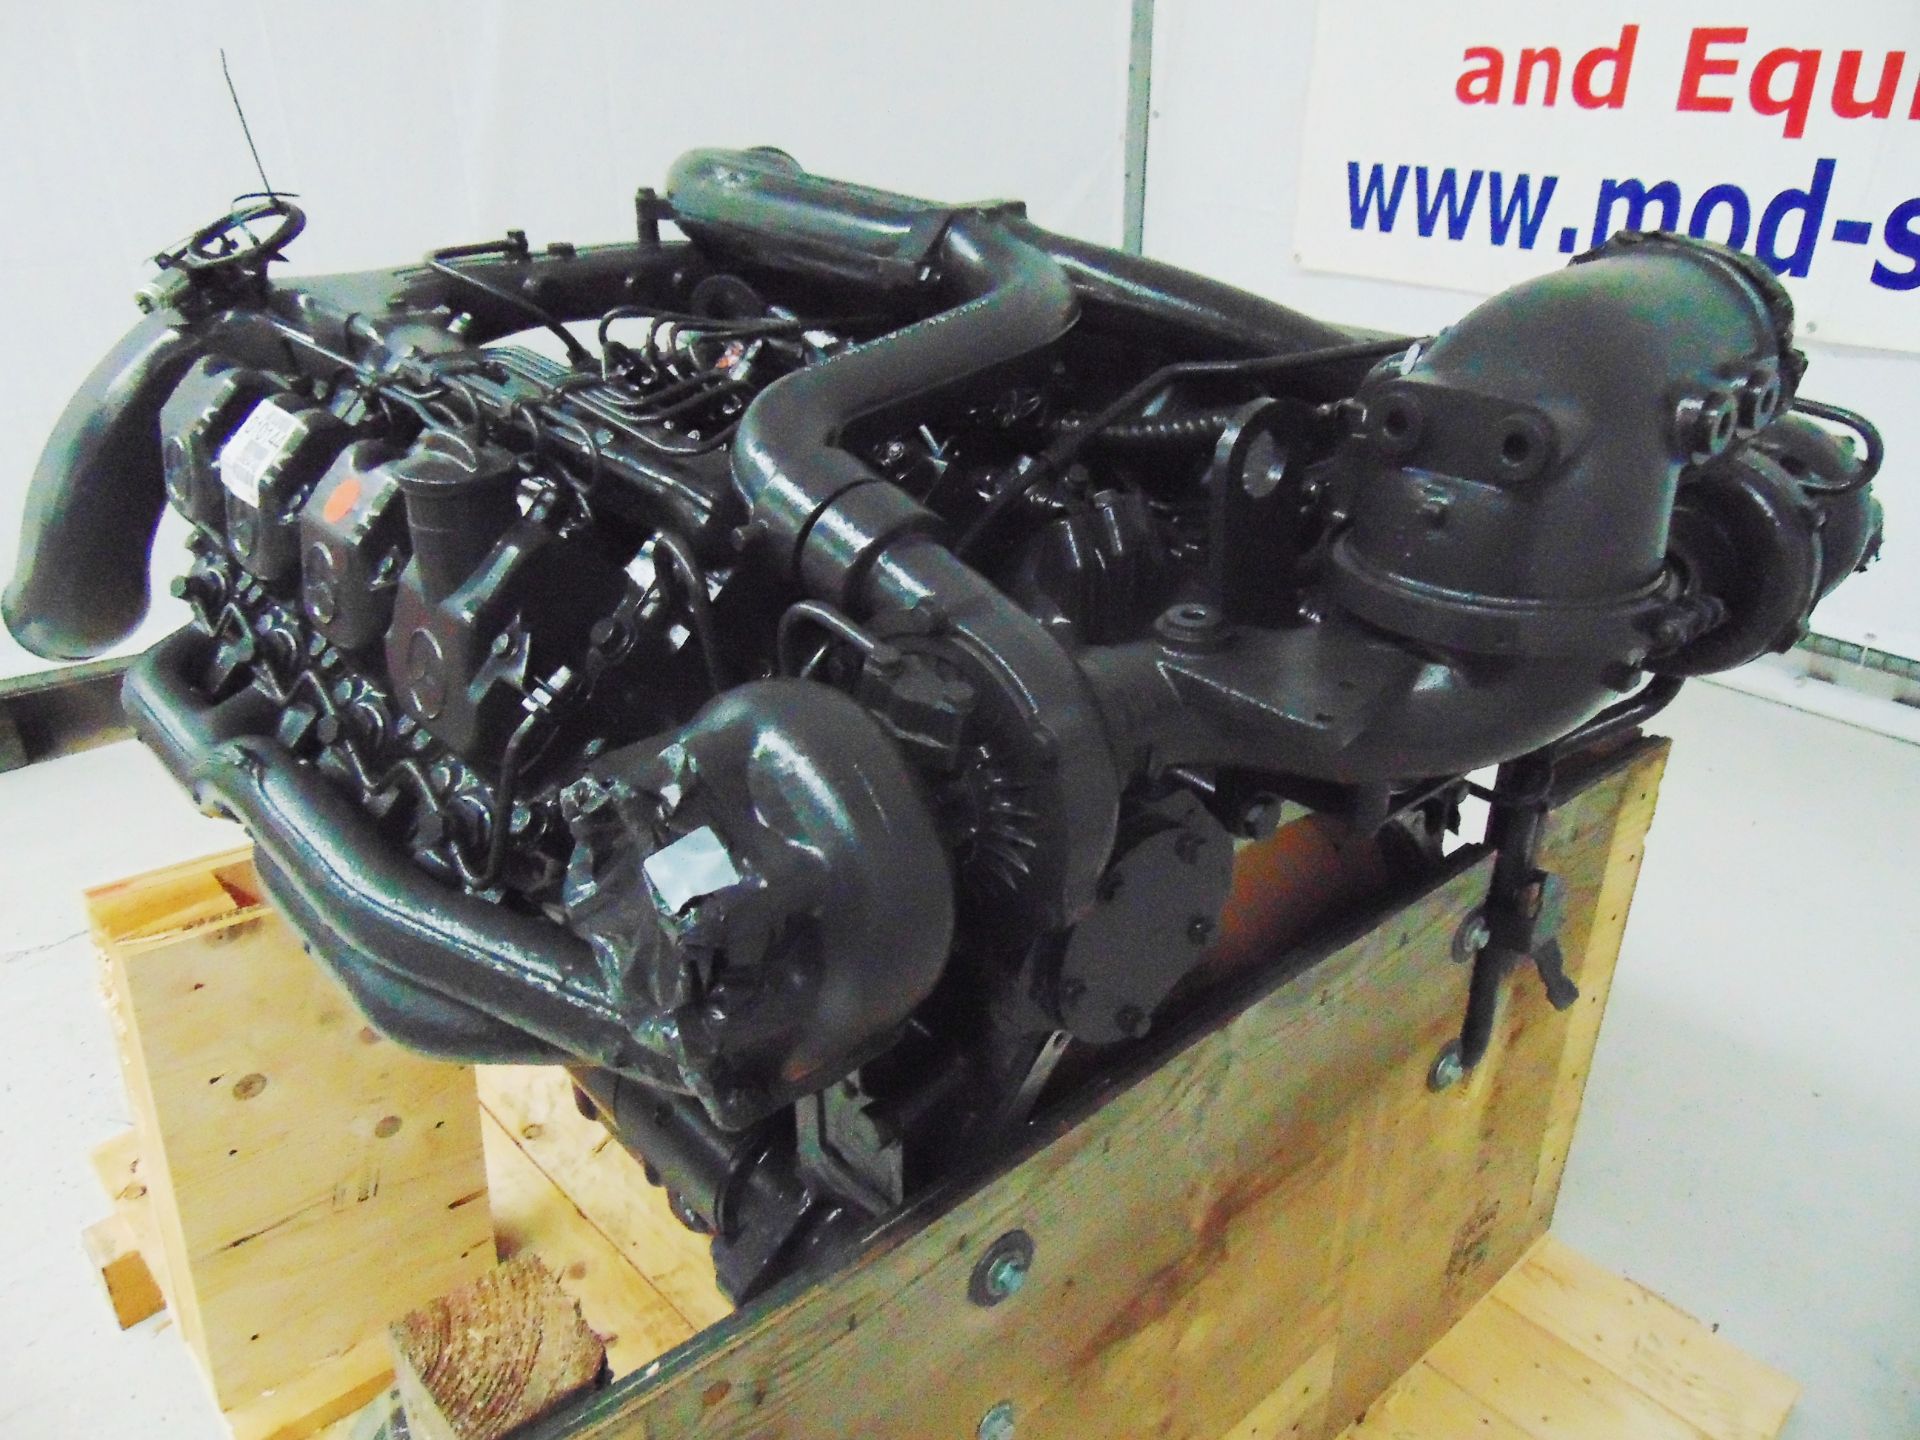 Brand New & Unused Mercedes-Benz OM402LA V8 Twin Turbo Diesel Engine - Image 5 of 13